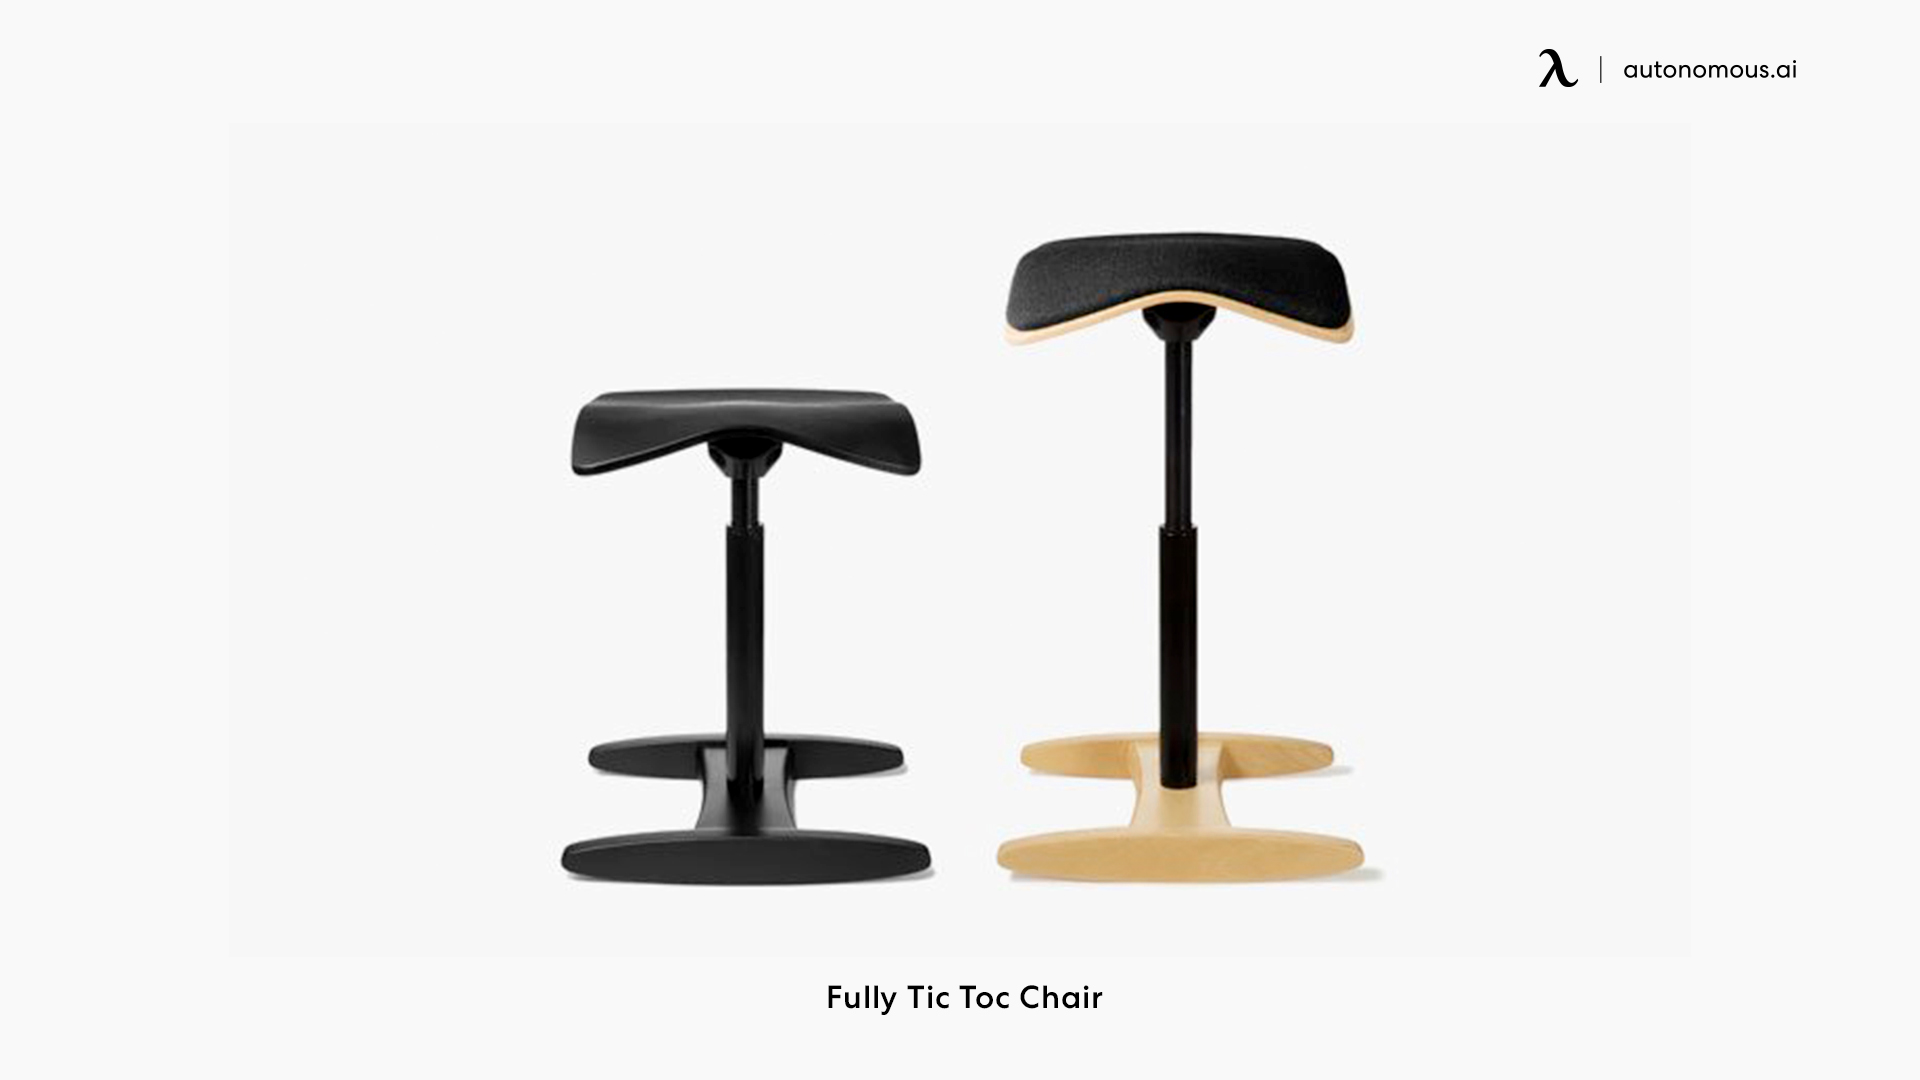 Tic Toc stylish ergonomic office chair